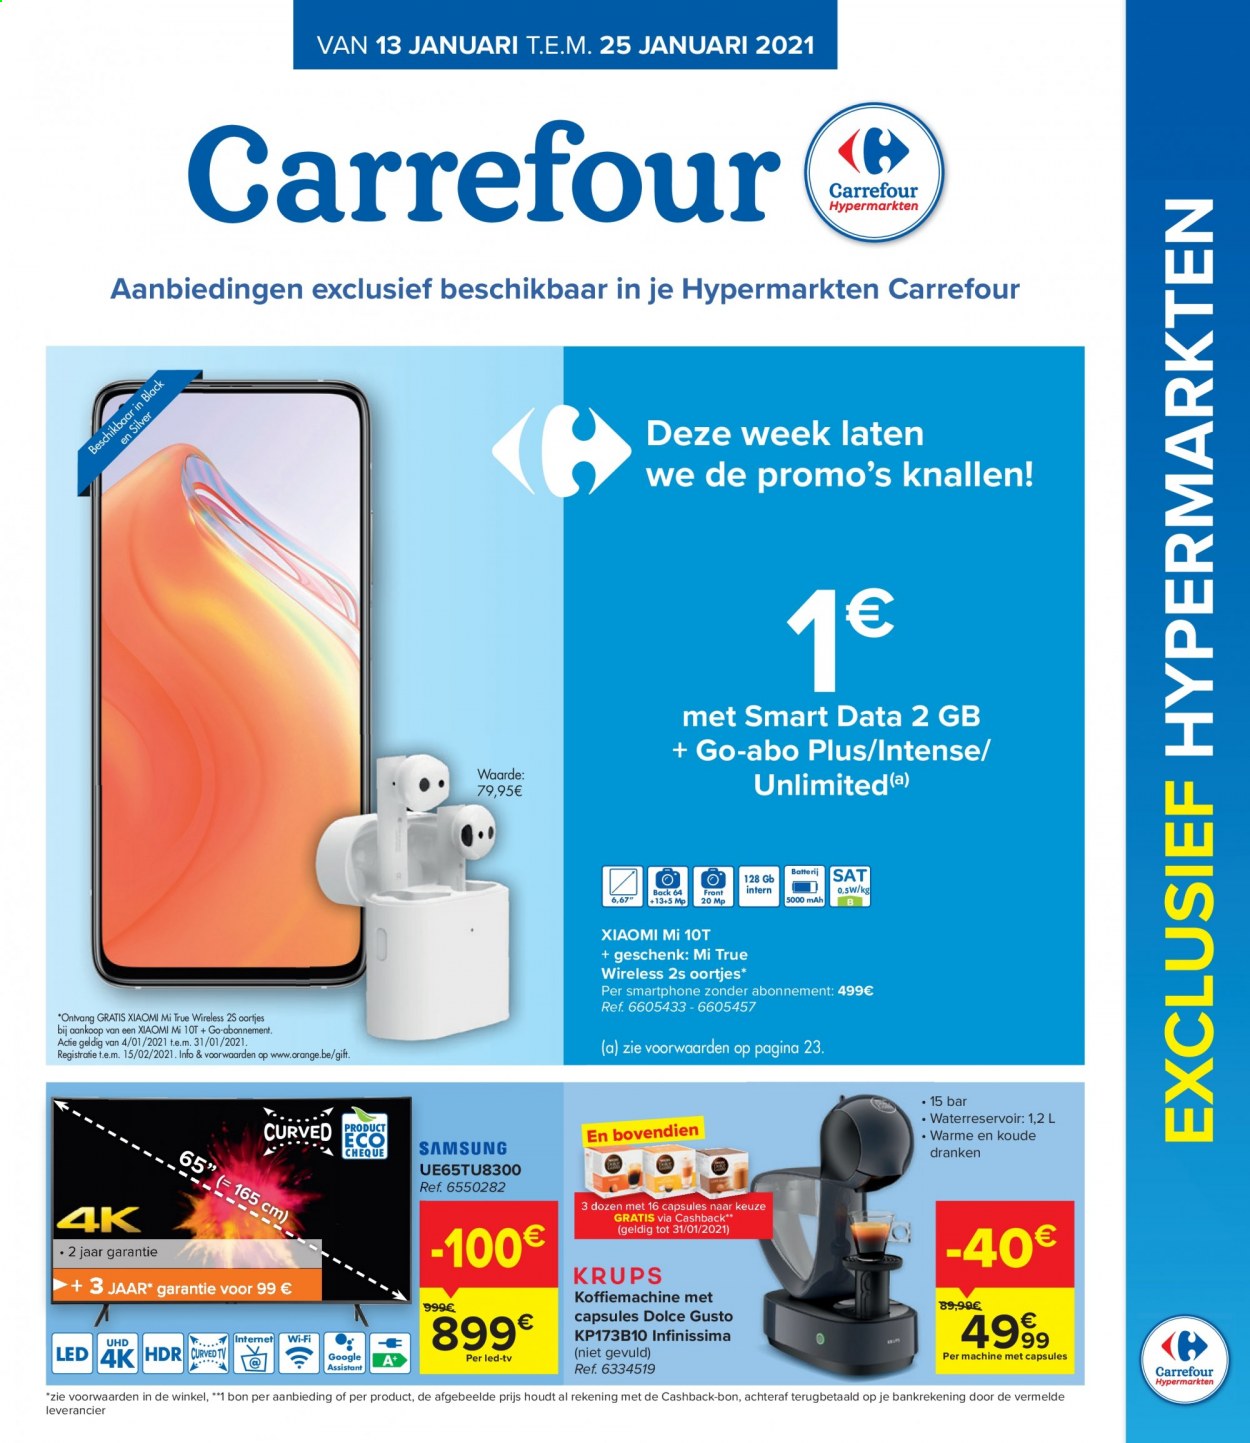 thumbnail - Carrefour hypermarkt-aanbieding - 13/01/2021 - 25/01/2021 -  producten in de aanbieding - Dolce Gusto, TV, Calvin Klein, smartphone. Pagina 1.